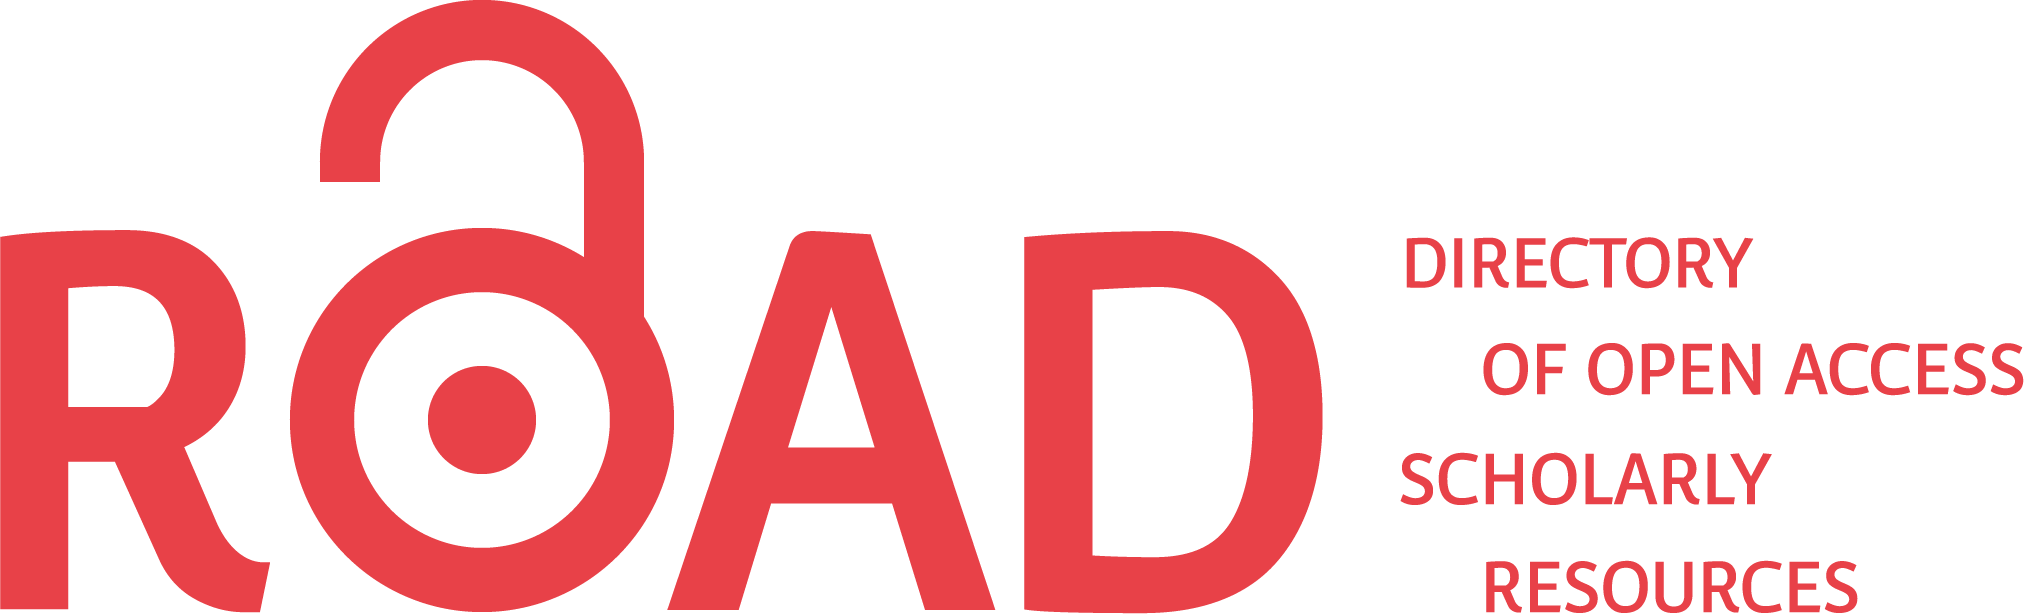 Сайт свободный доступ. Open access logo. Логотип DOAJ. Открытый доступ. DOAJ баннеры.